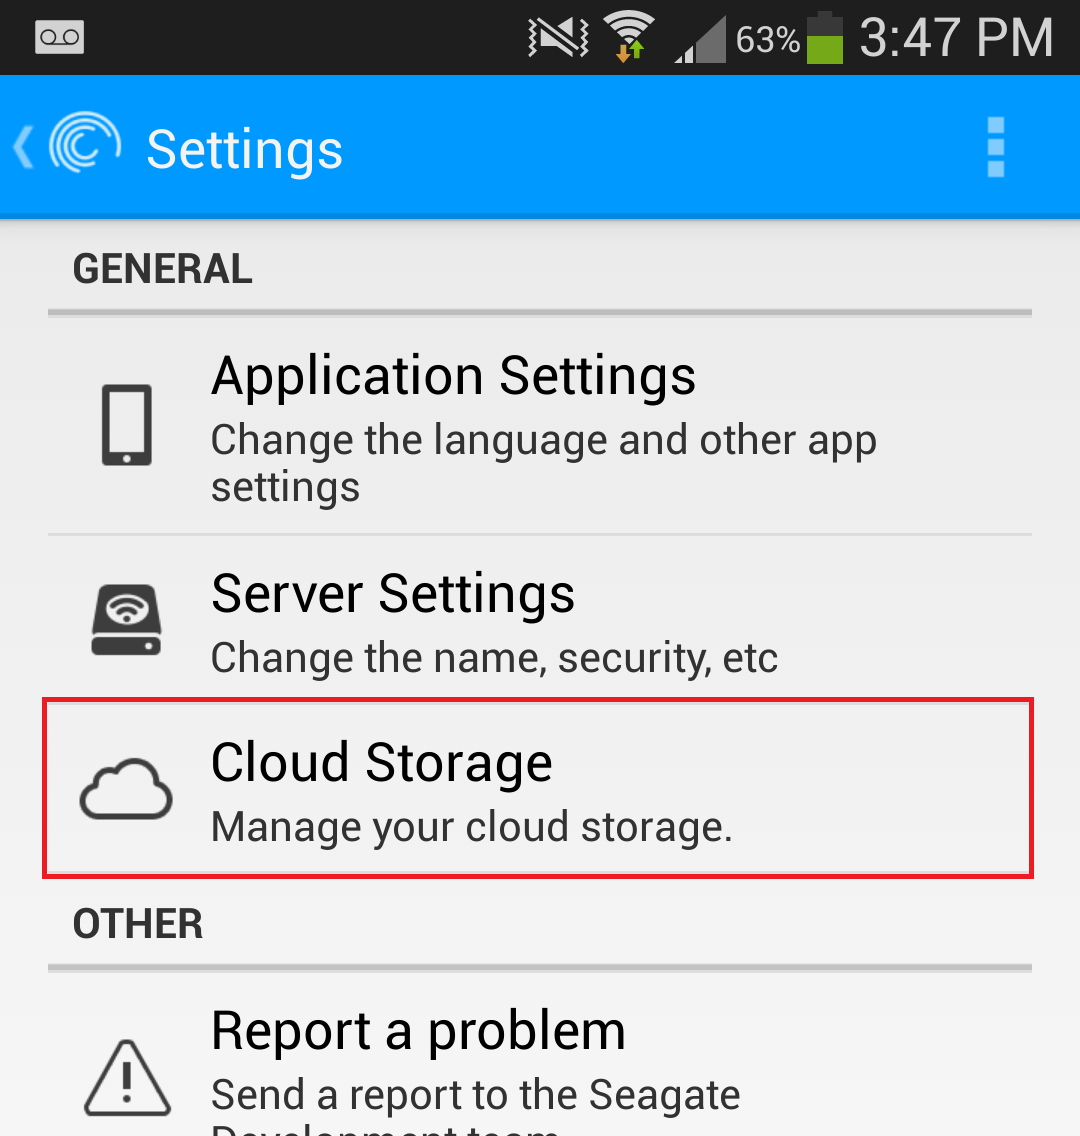 Cloud Storage 